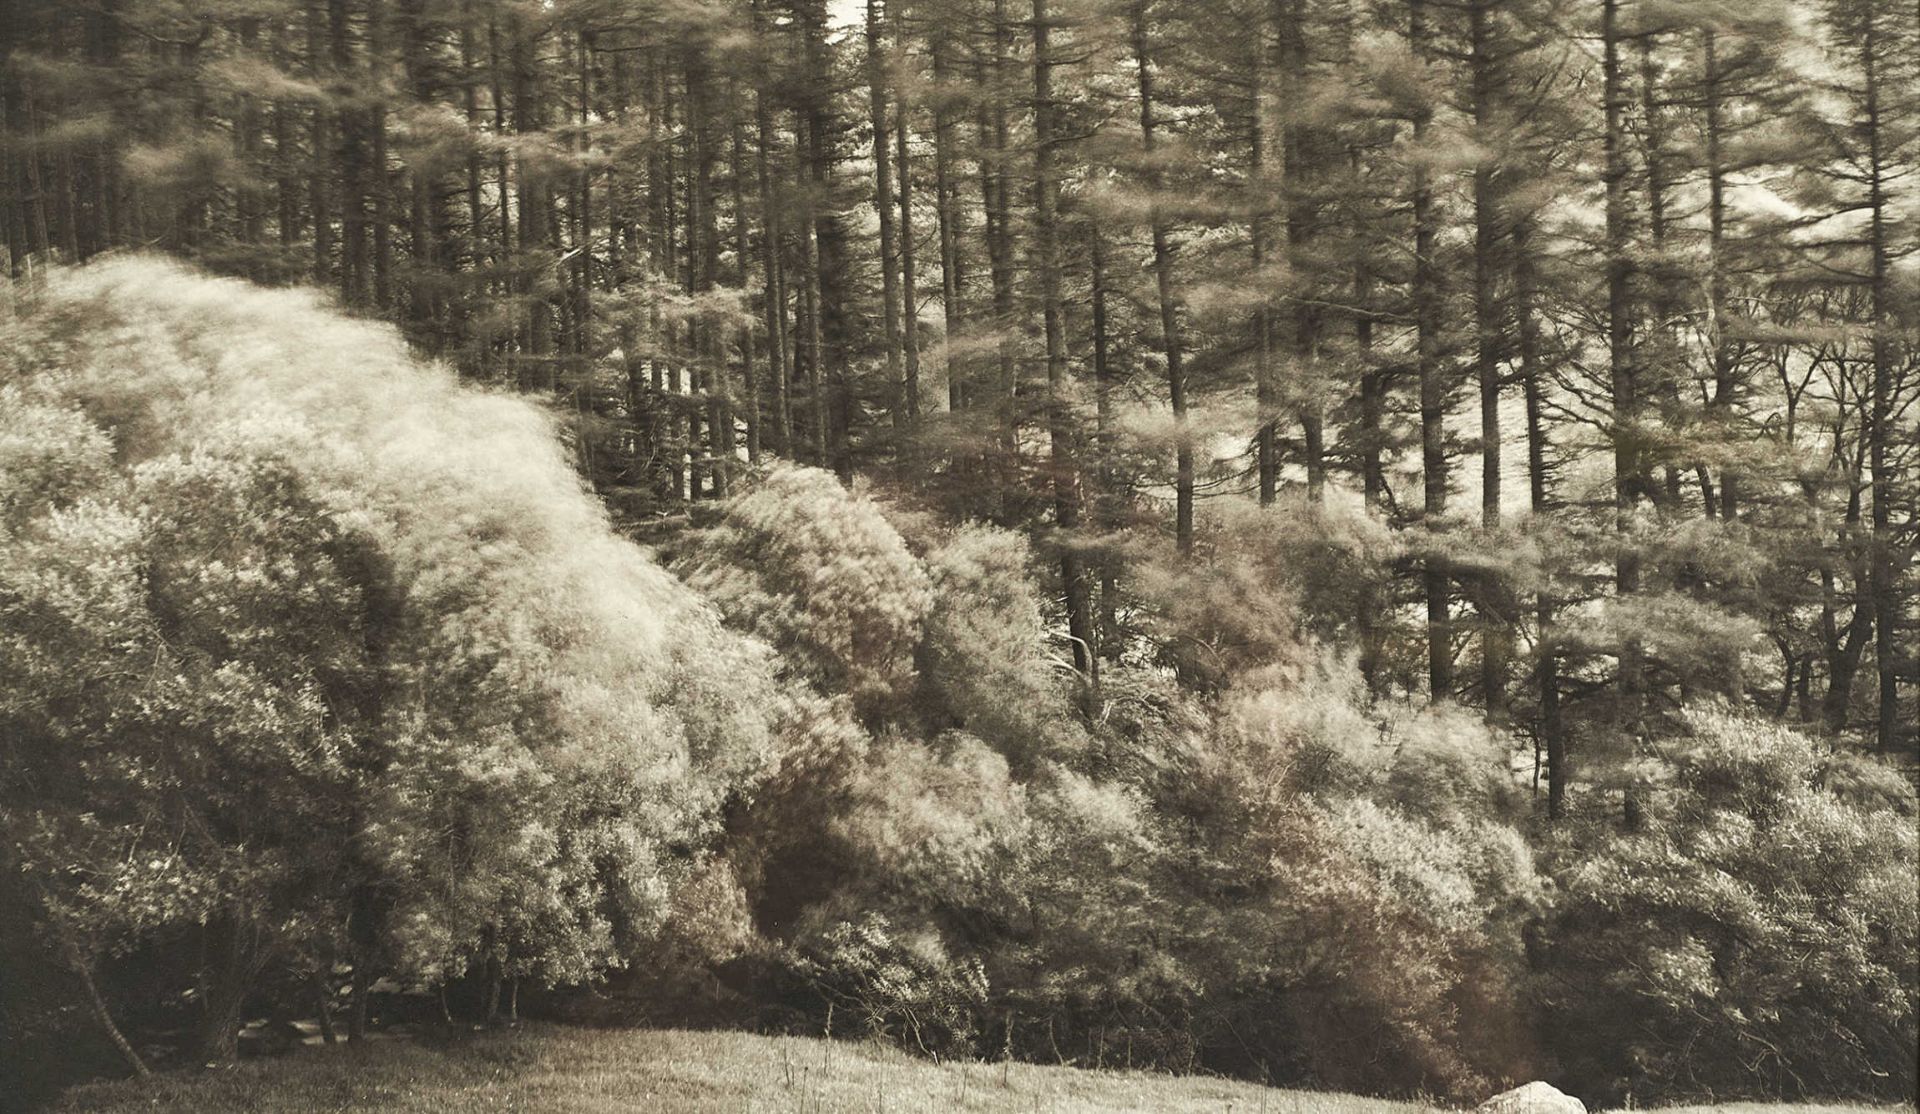 ARENTZ, DICKDetroit 1935Thorny Thwaite Forest, Cumbria England.Platin-Palladium-Druck,sig. u.